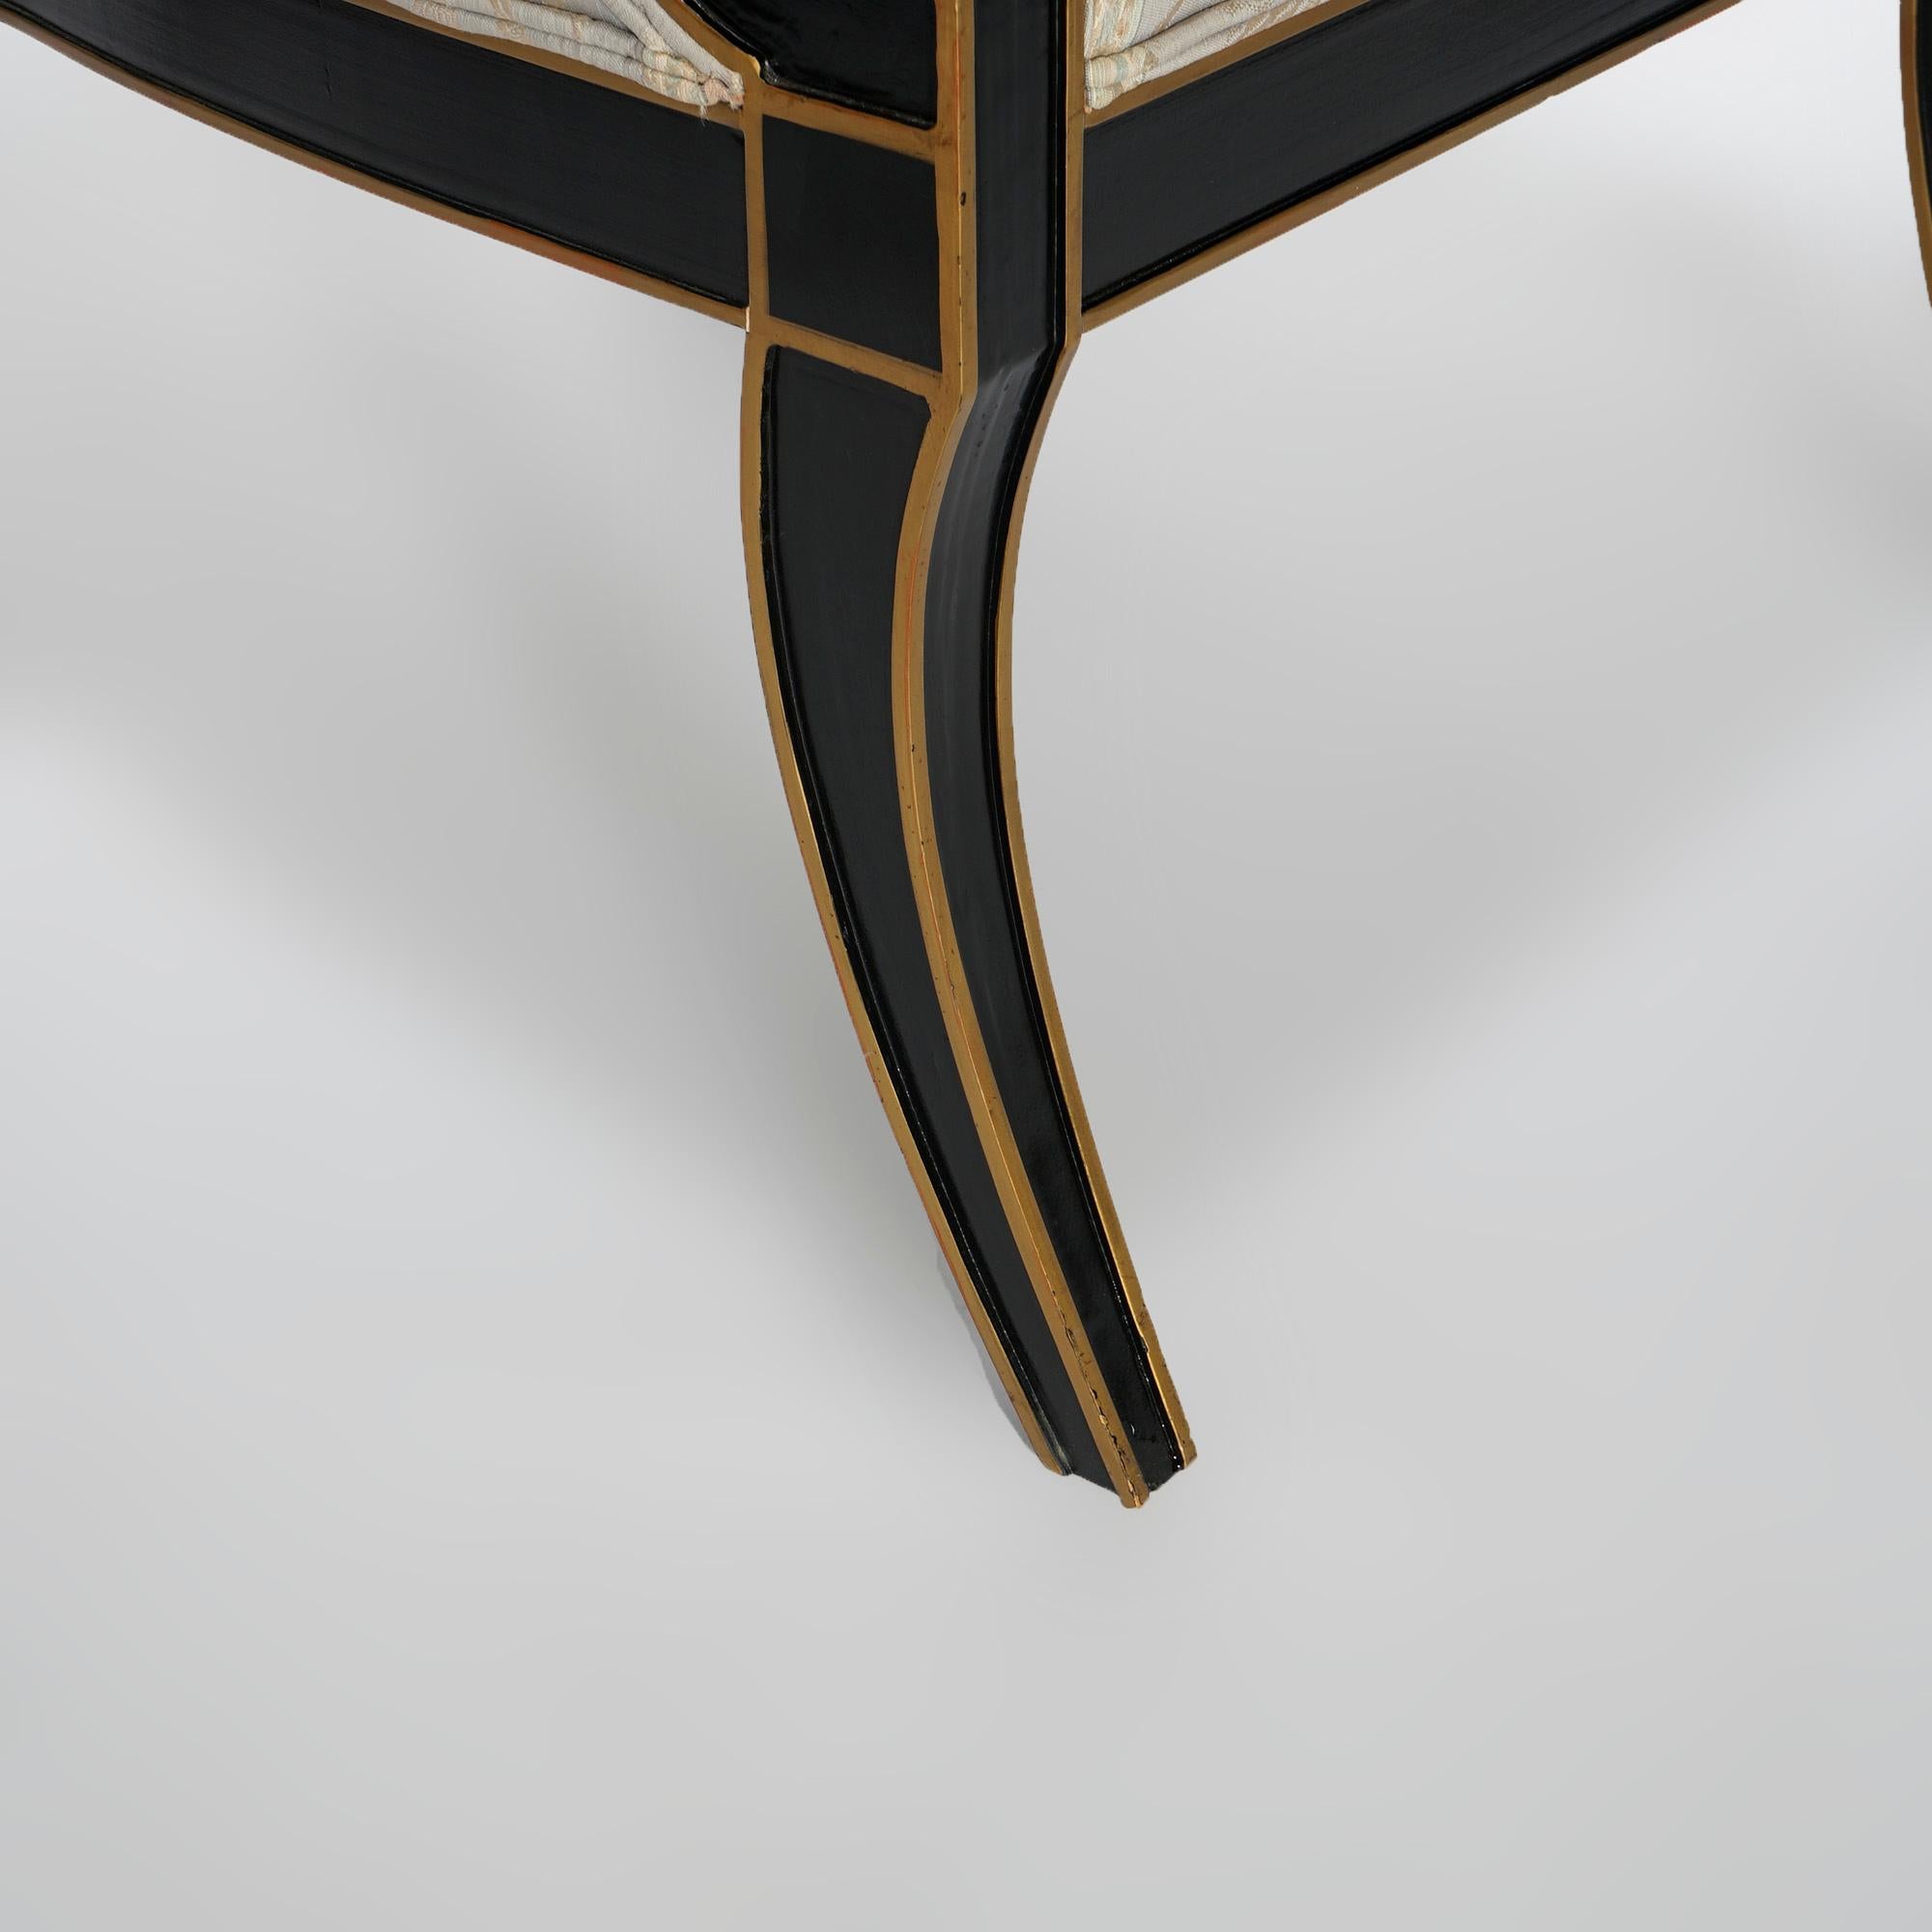 Drexel Heritage French Empire Ebonized & Gilt Upholstered Arm Chairs 20thC 13